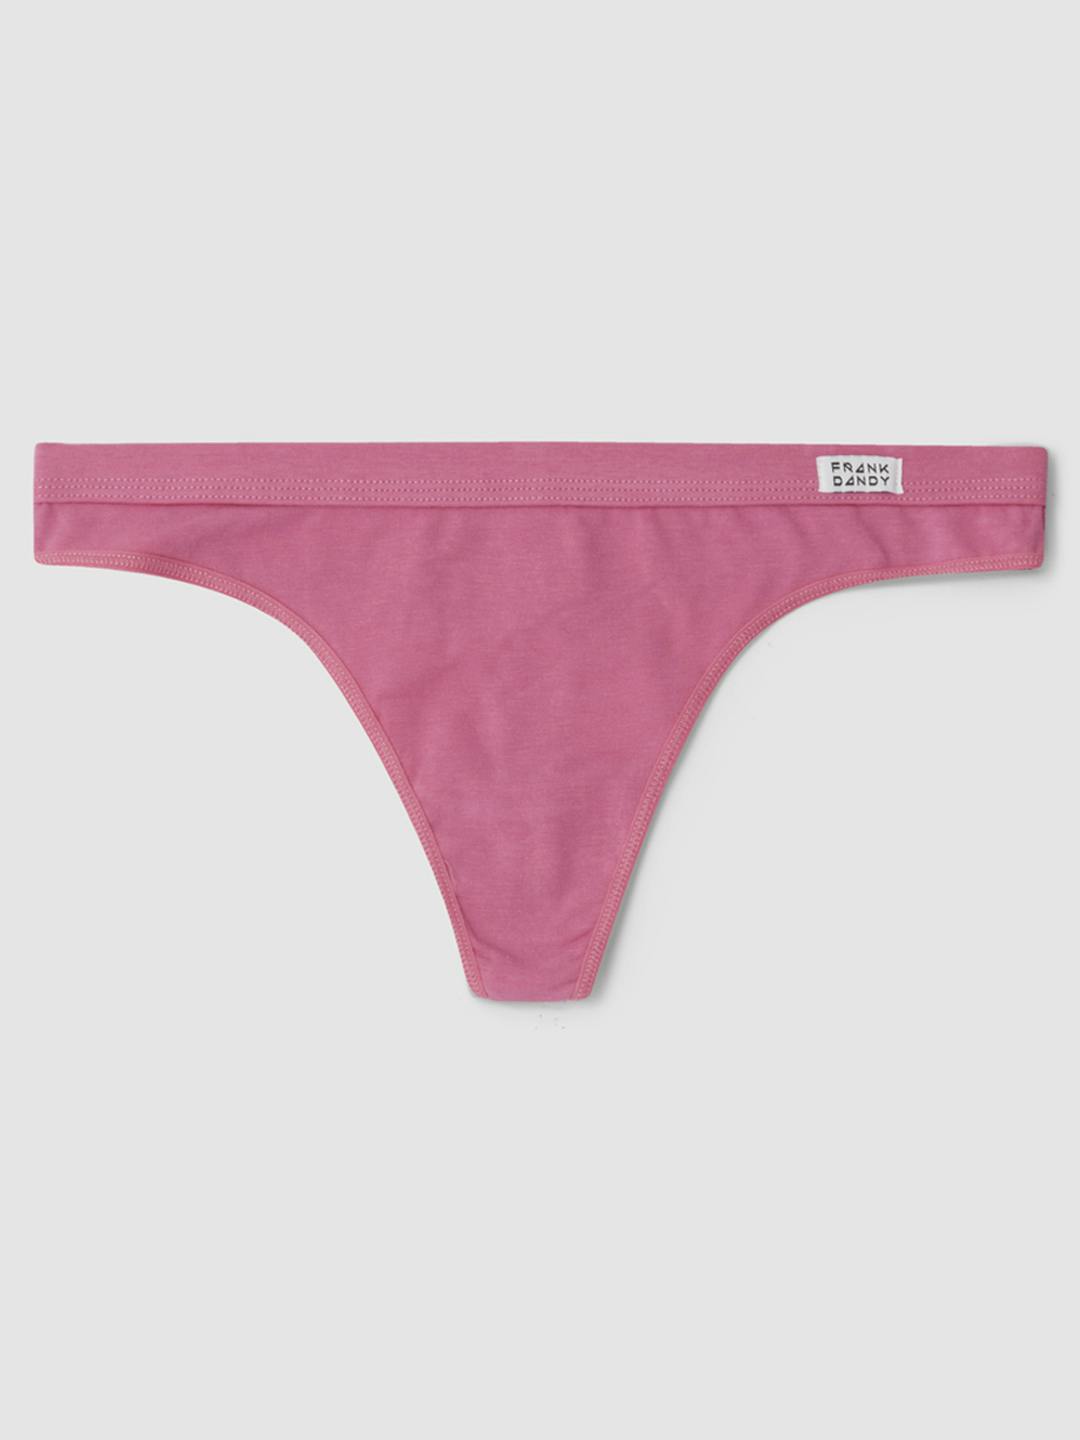 Thong Bamboo - Beige, Women's Underwear, Frank Dandy